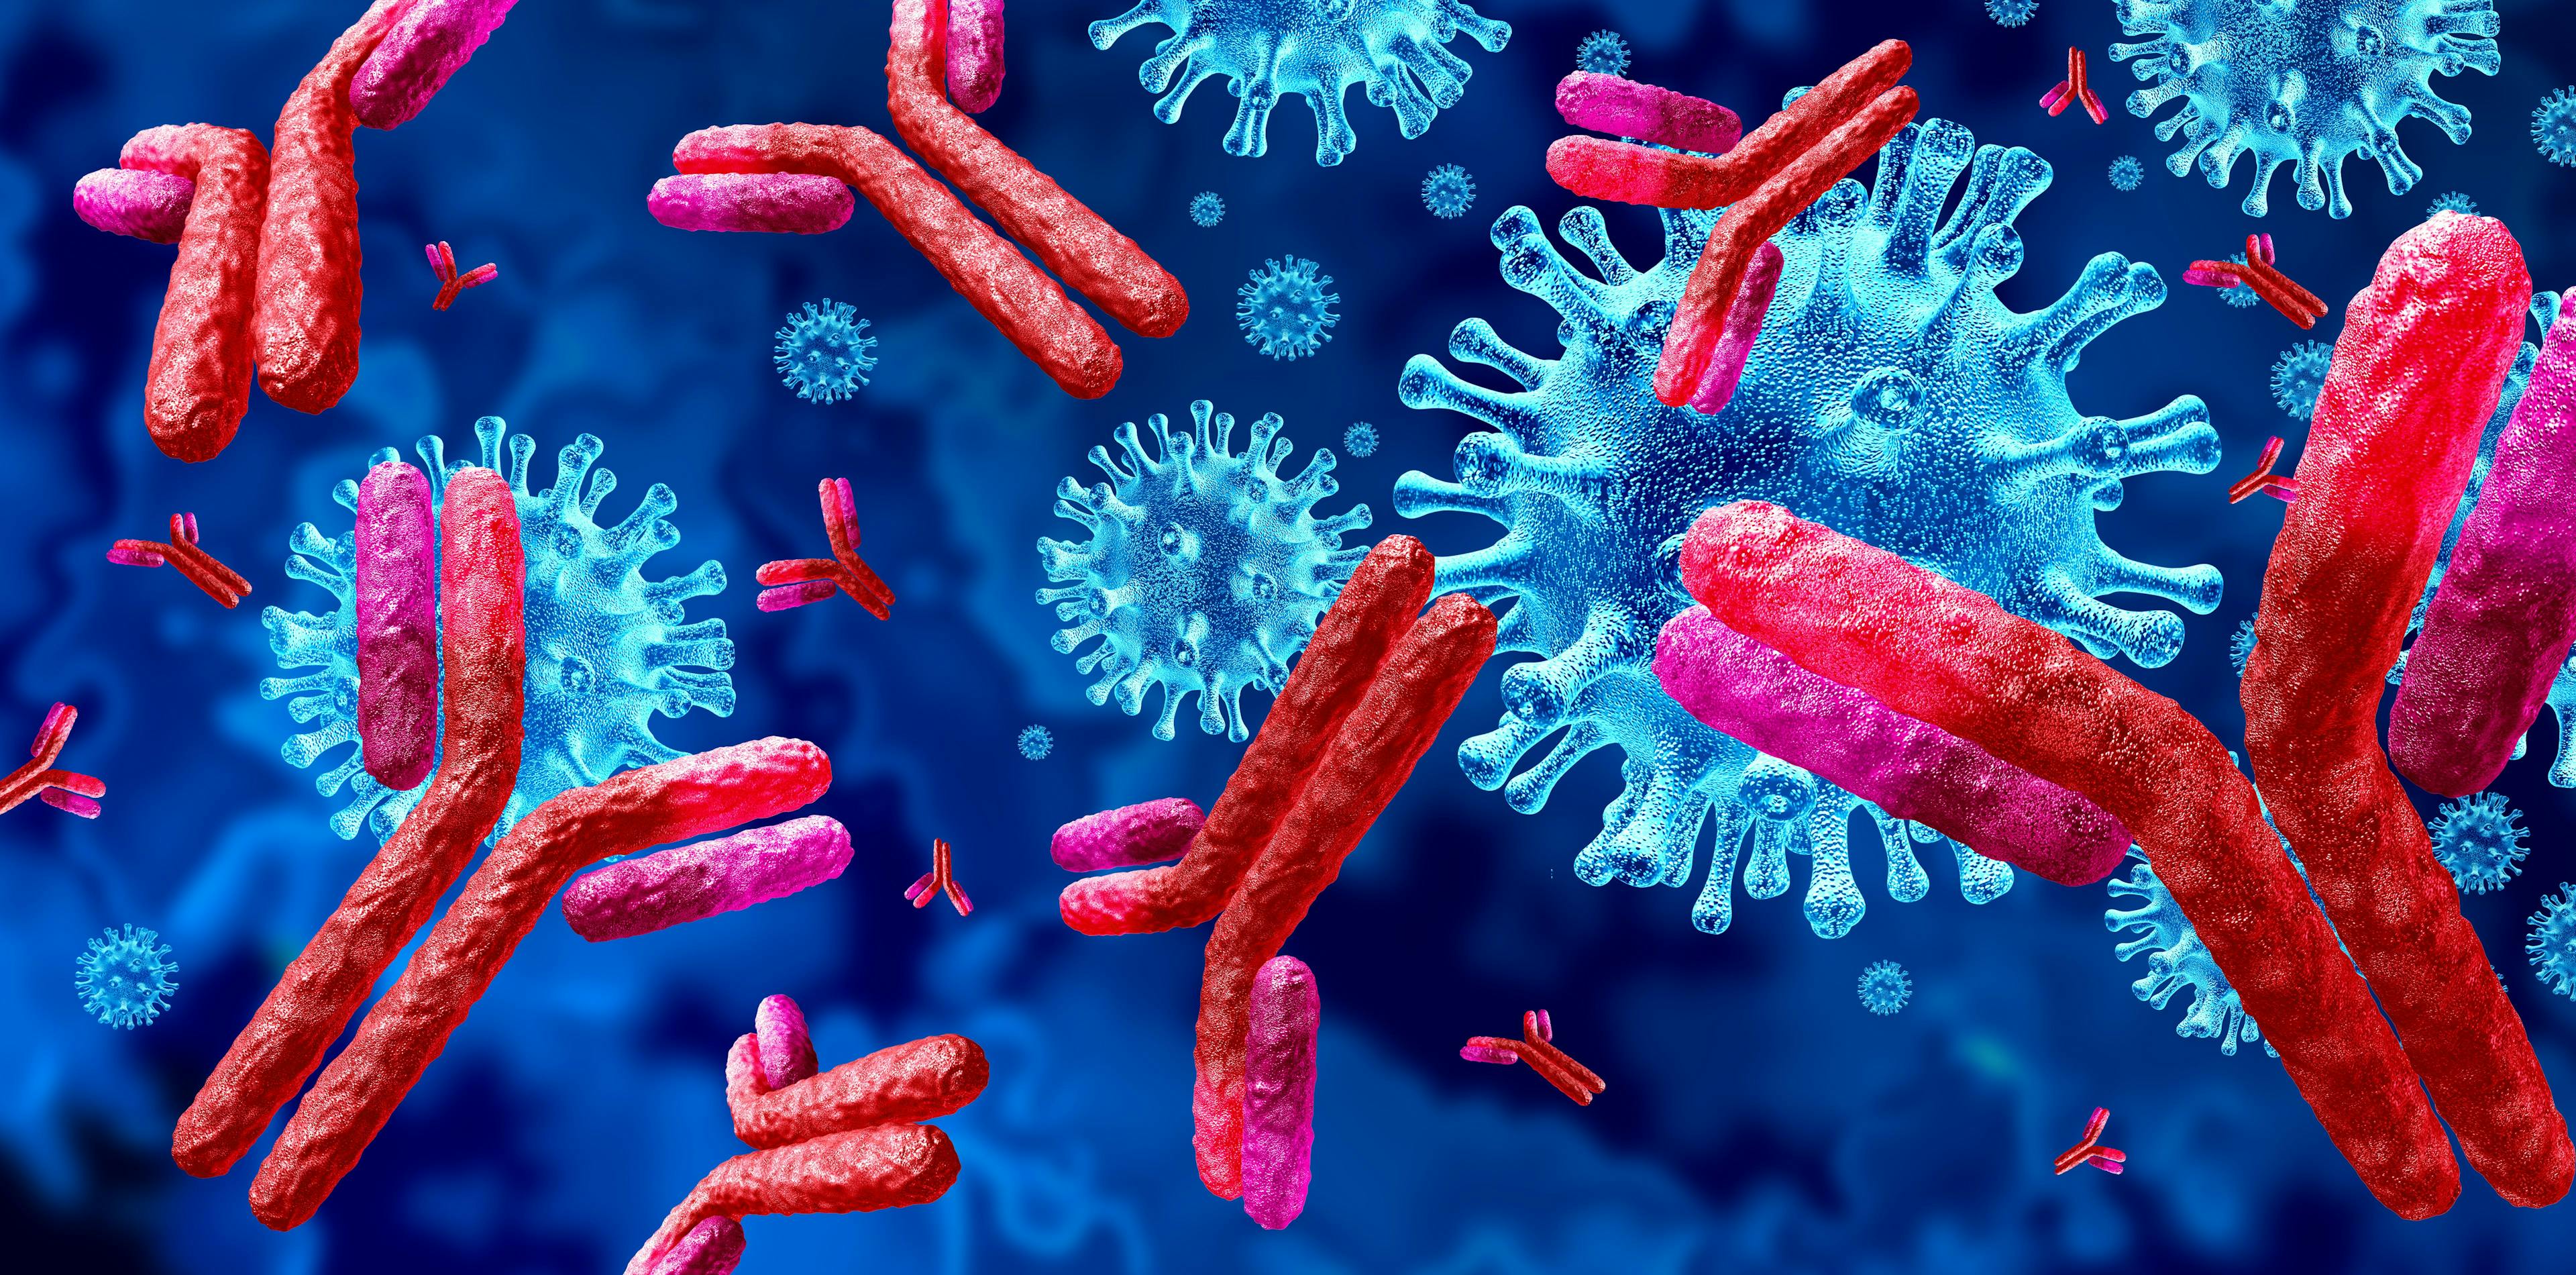 Antibody Immunoglobulin | Image Credit: © freshidea - stock.adobe.com